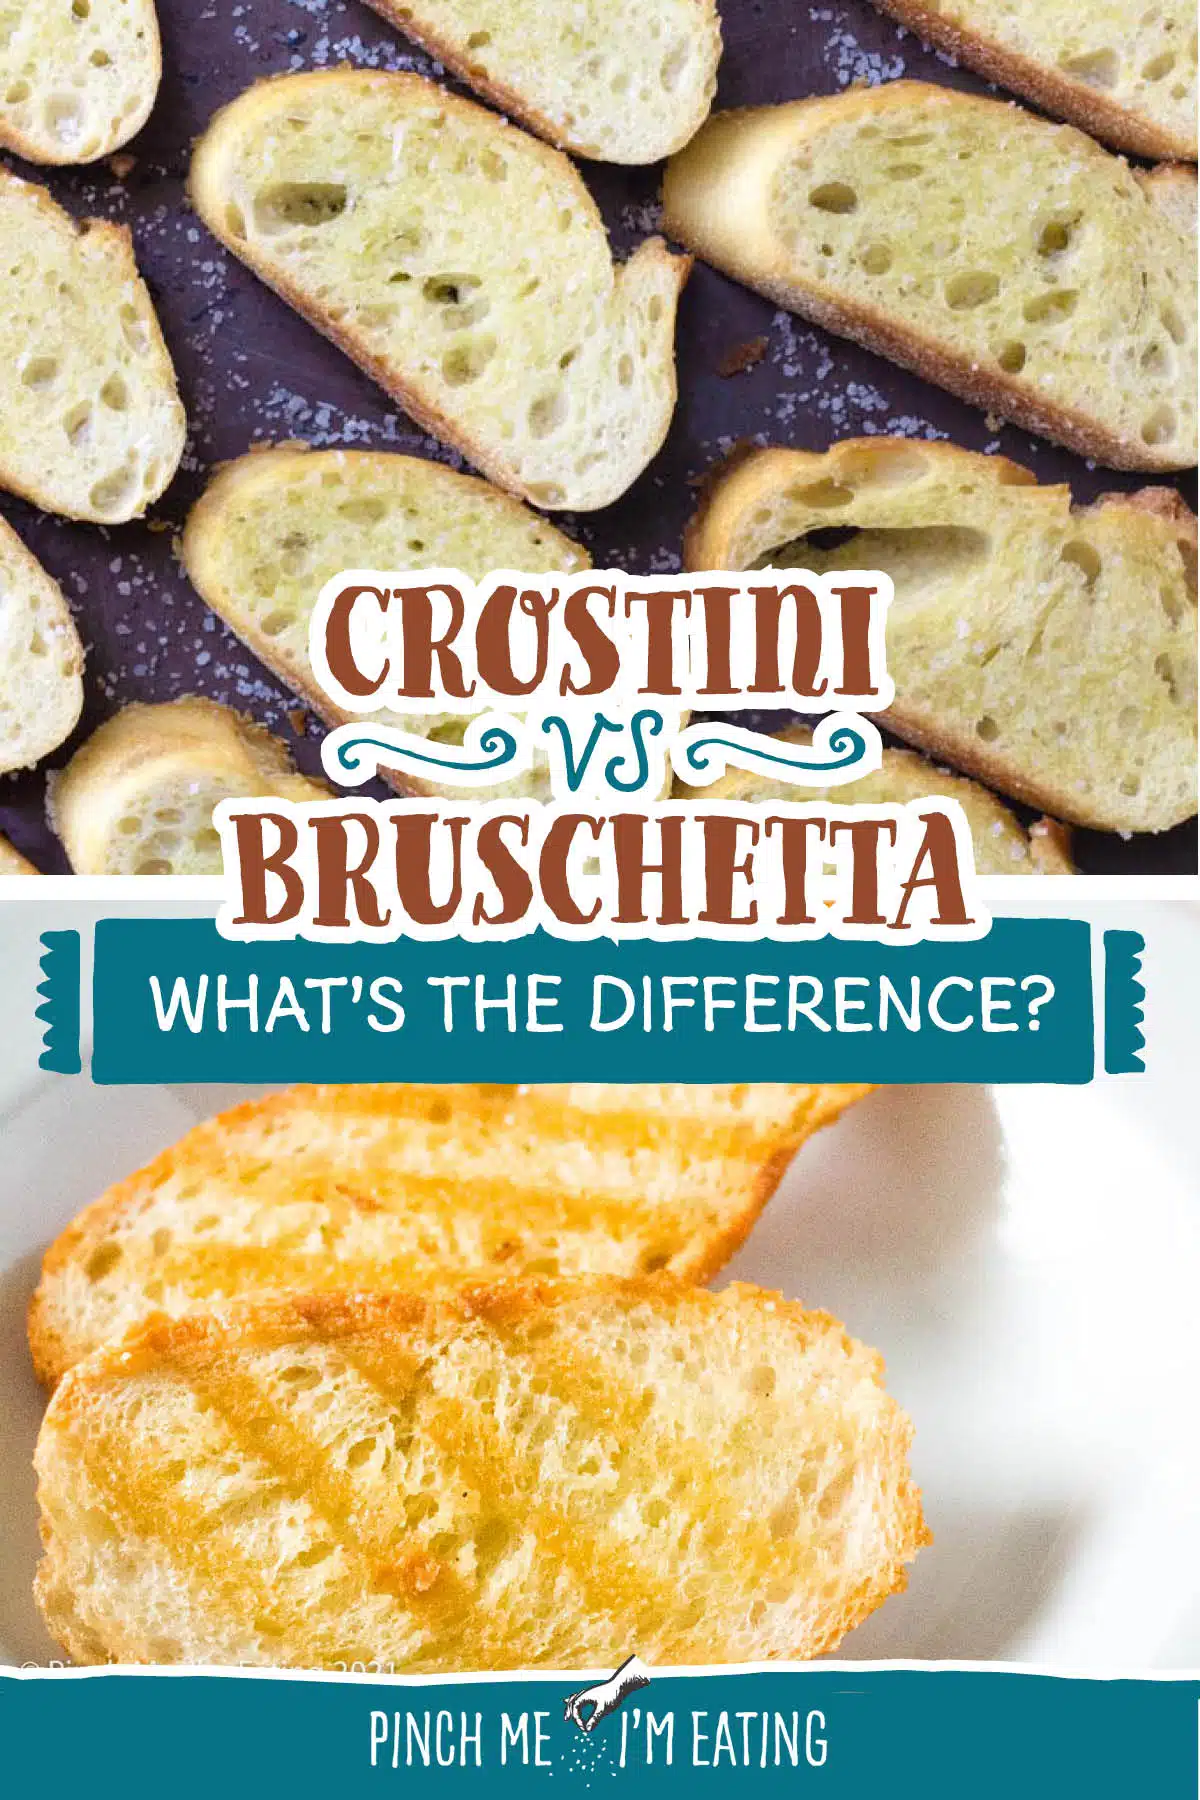 Crostini vs. Bruschetta: What’s the difference?